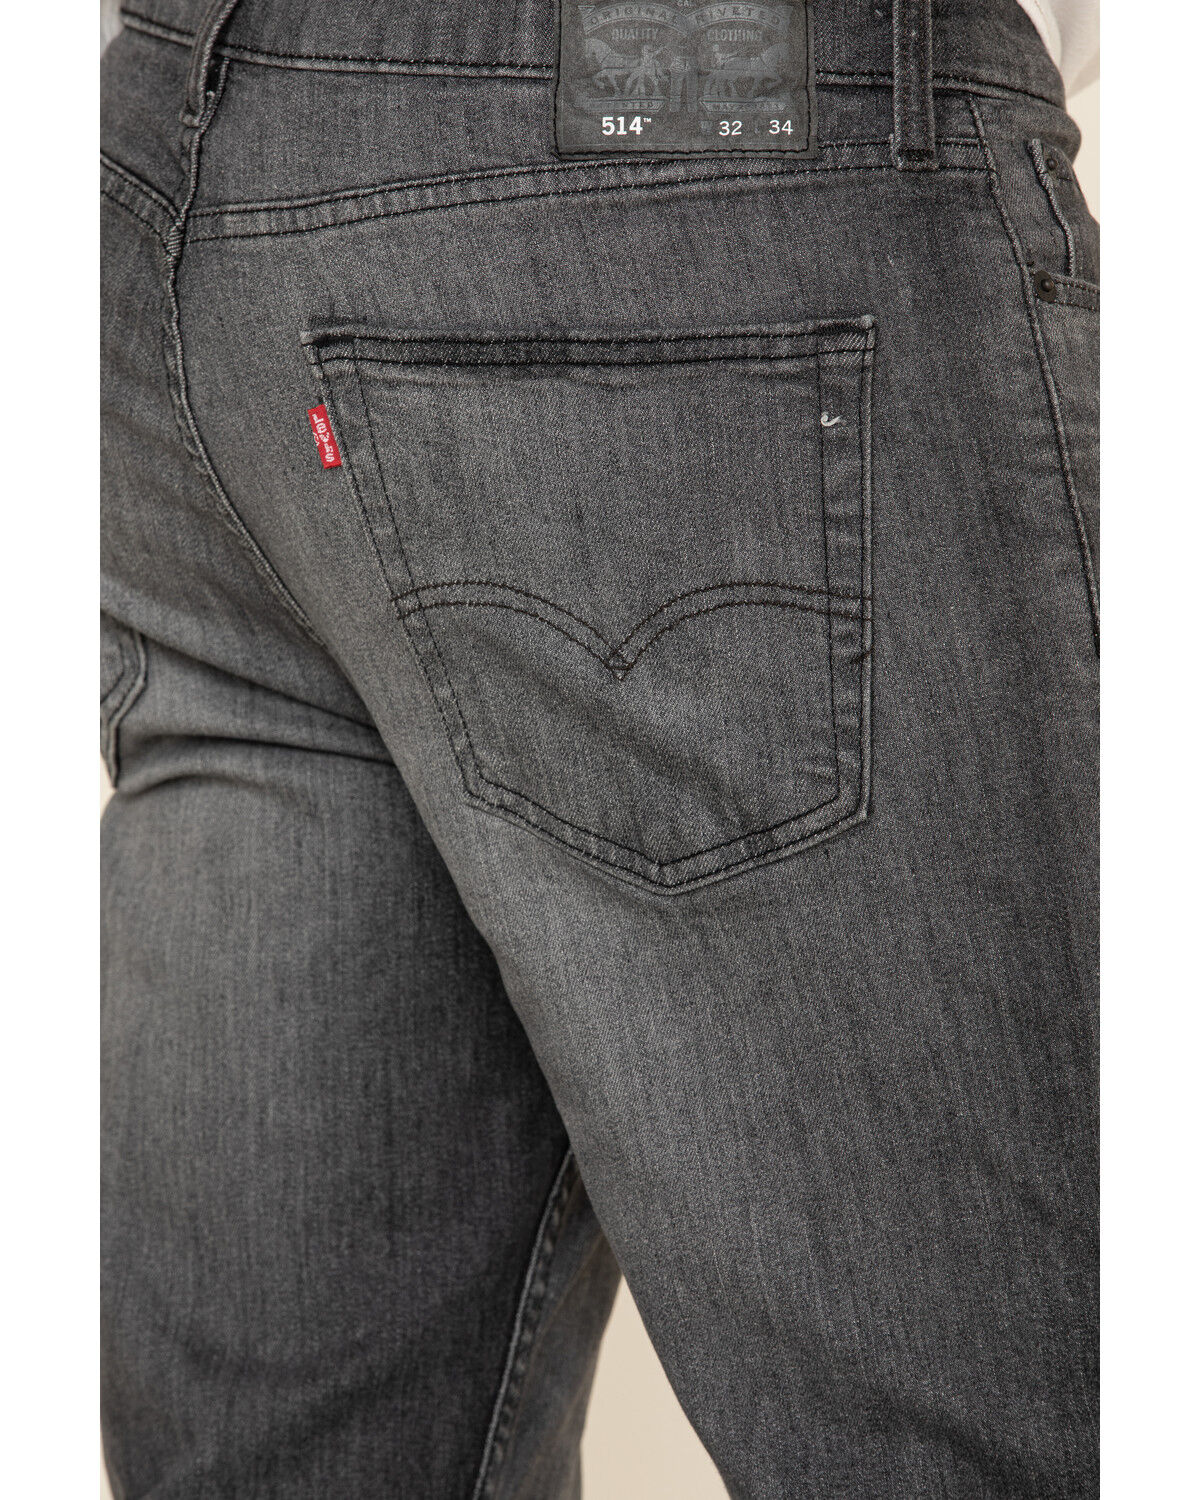 Levi's ® 514 Jeans - Prewashed Slim Fit 